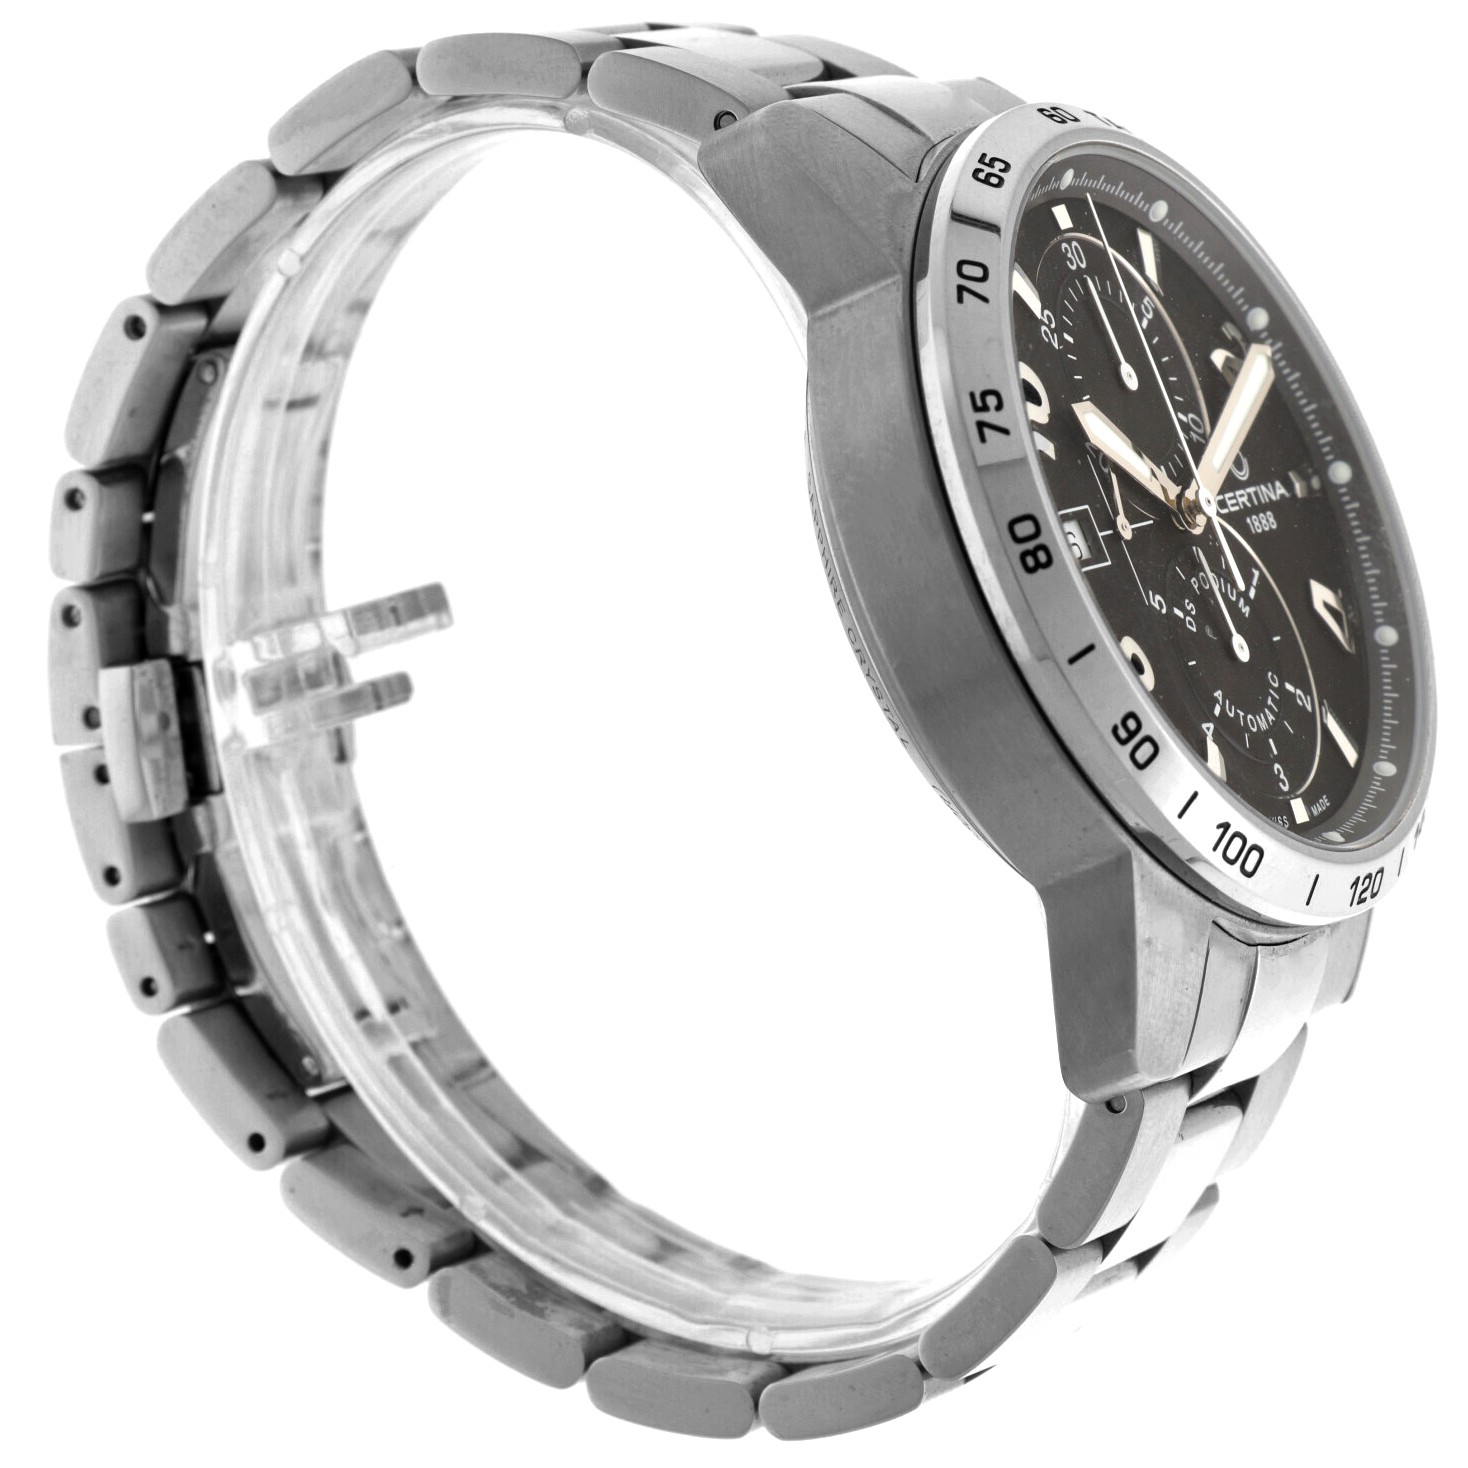 No Reserve - Certina DS Podium Chronograph C034.427.11.057.00 - Men's watch. - Image 4 of 6